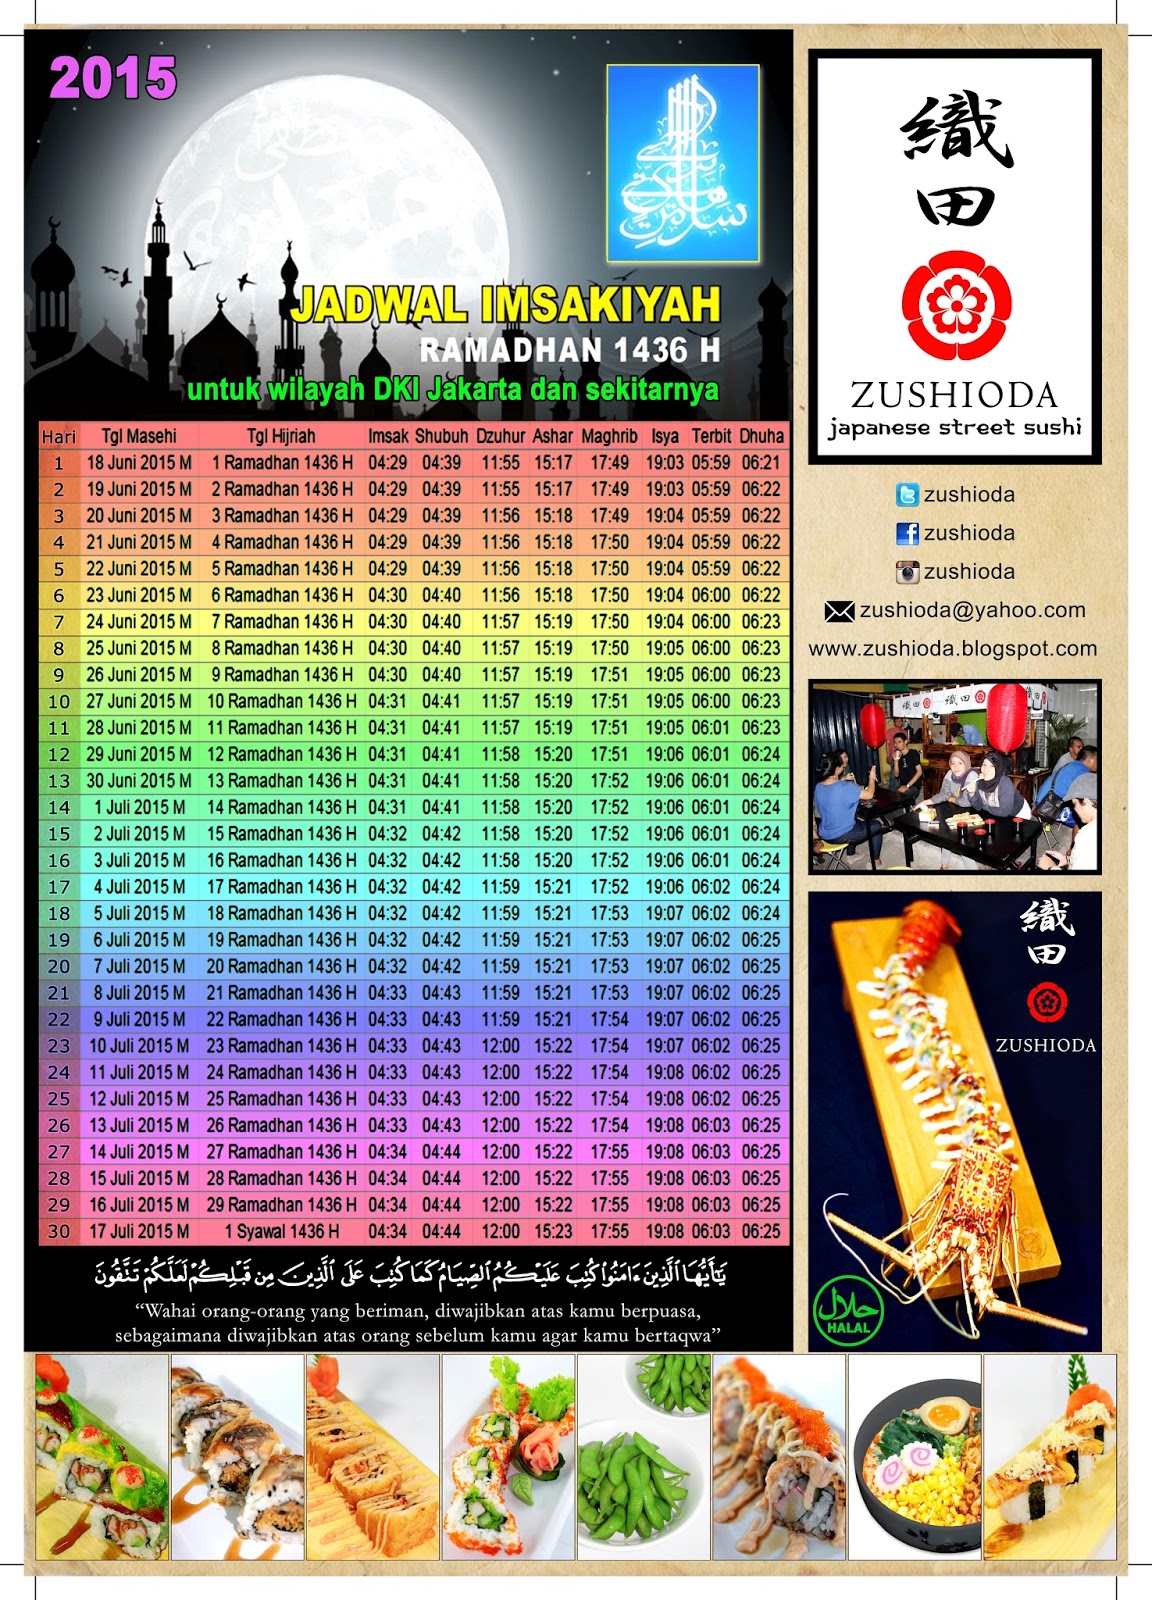 ZUSHIODA: Jadwal imsak puasa ramadhan 1439H 2018